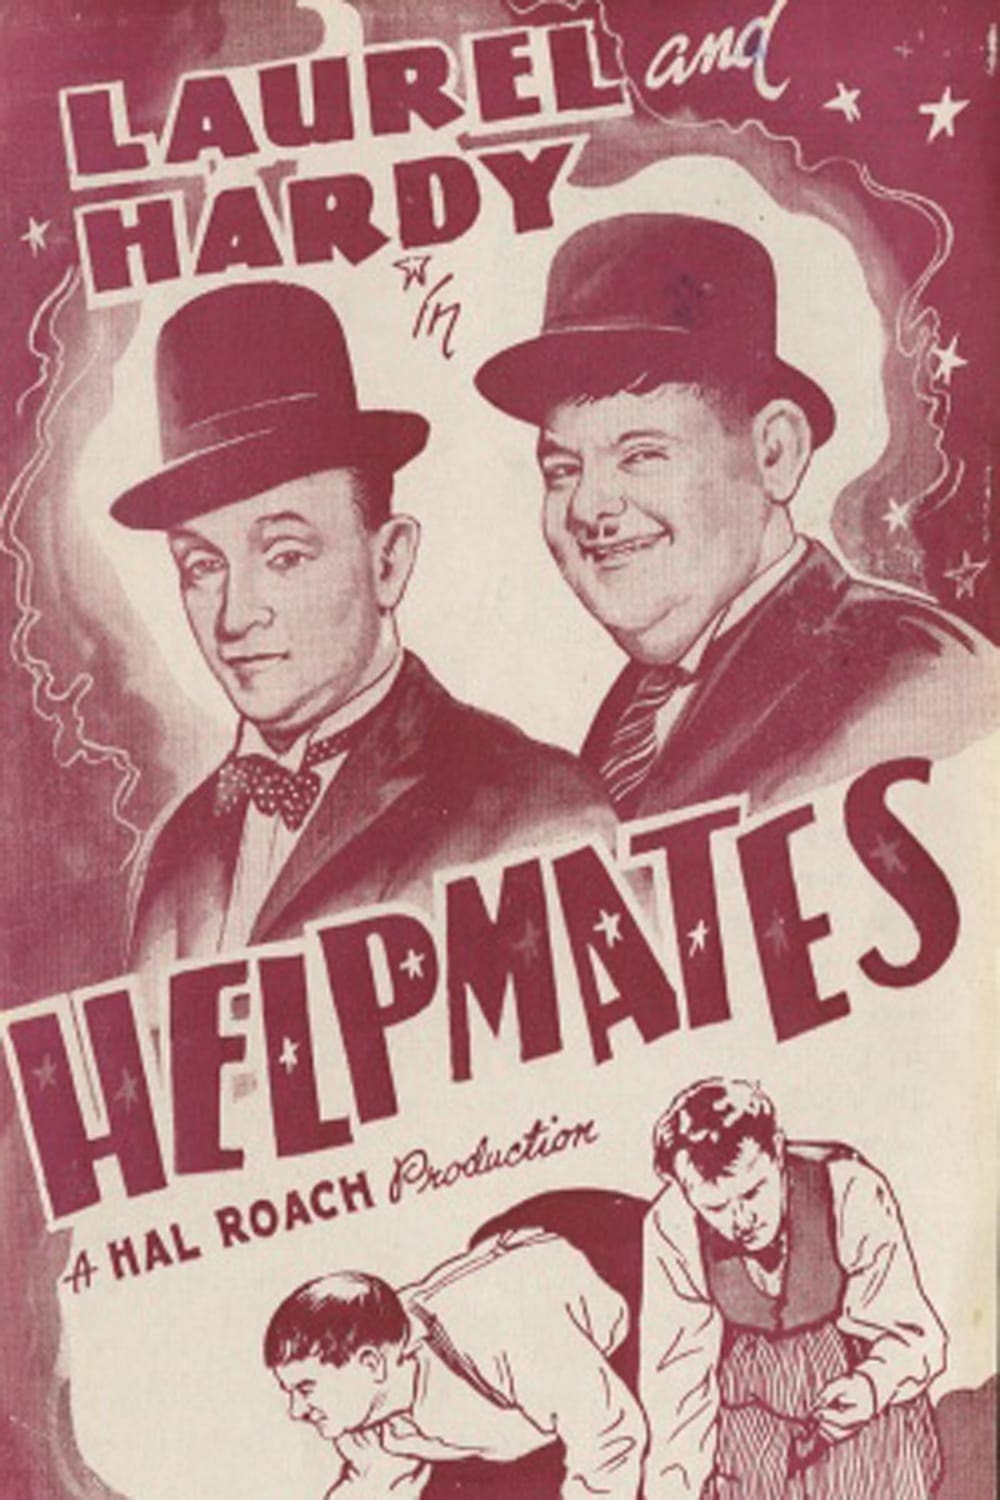 Helpmates (1932)